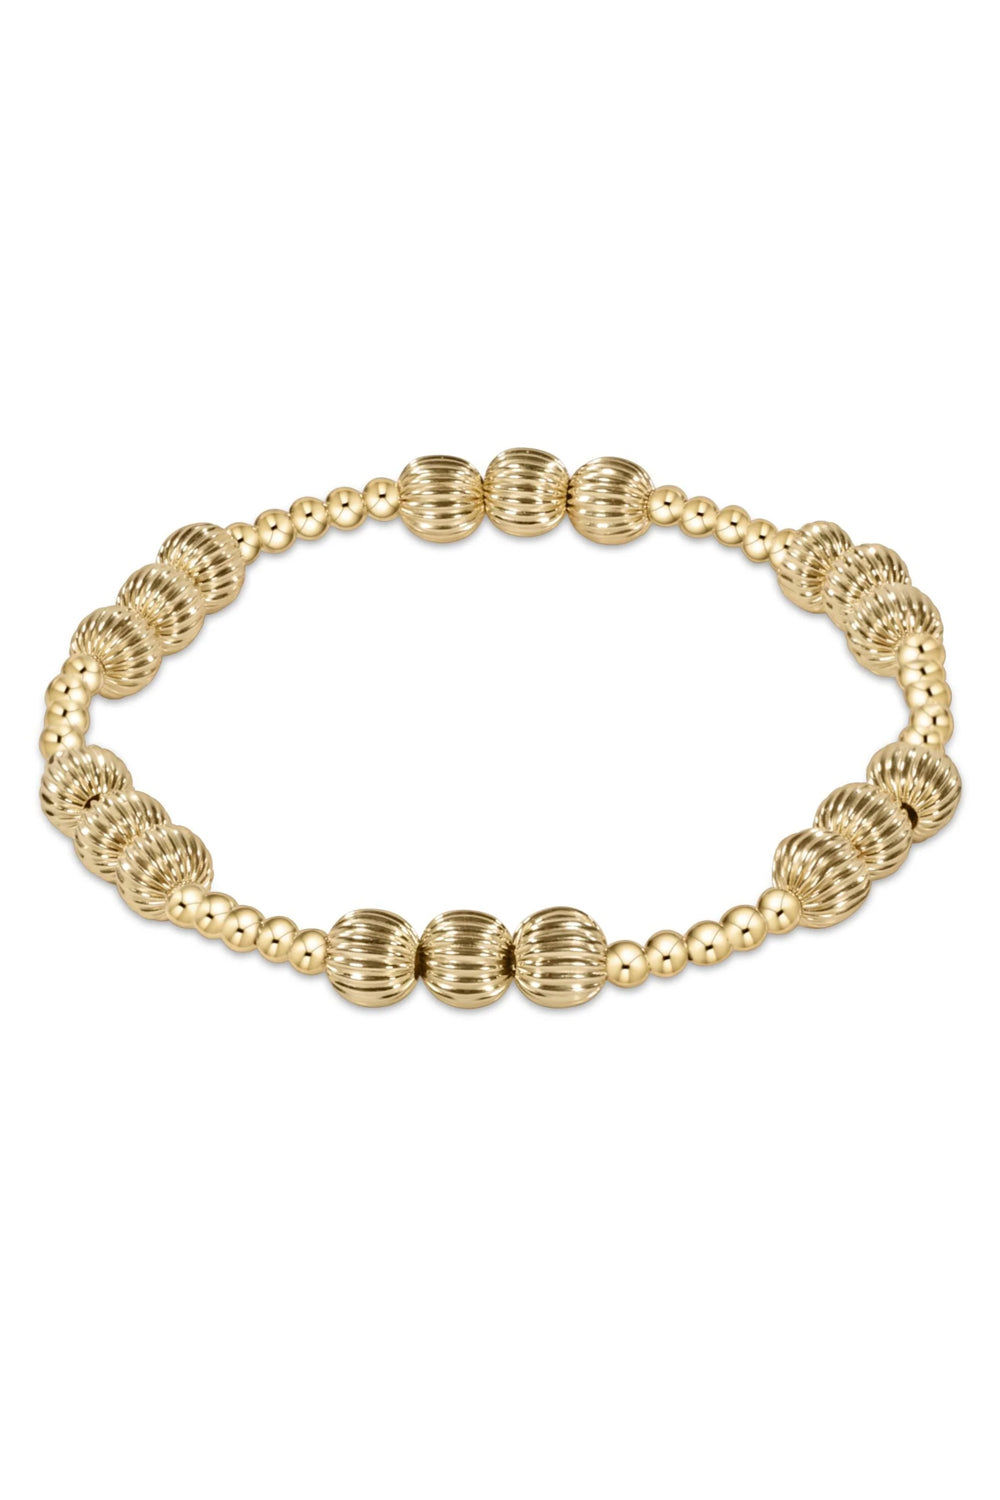 enewton: Dignity Joy Pattern 6mm Bead Bracelet - Gold | Makk Fashions